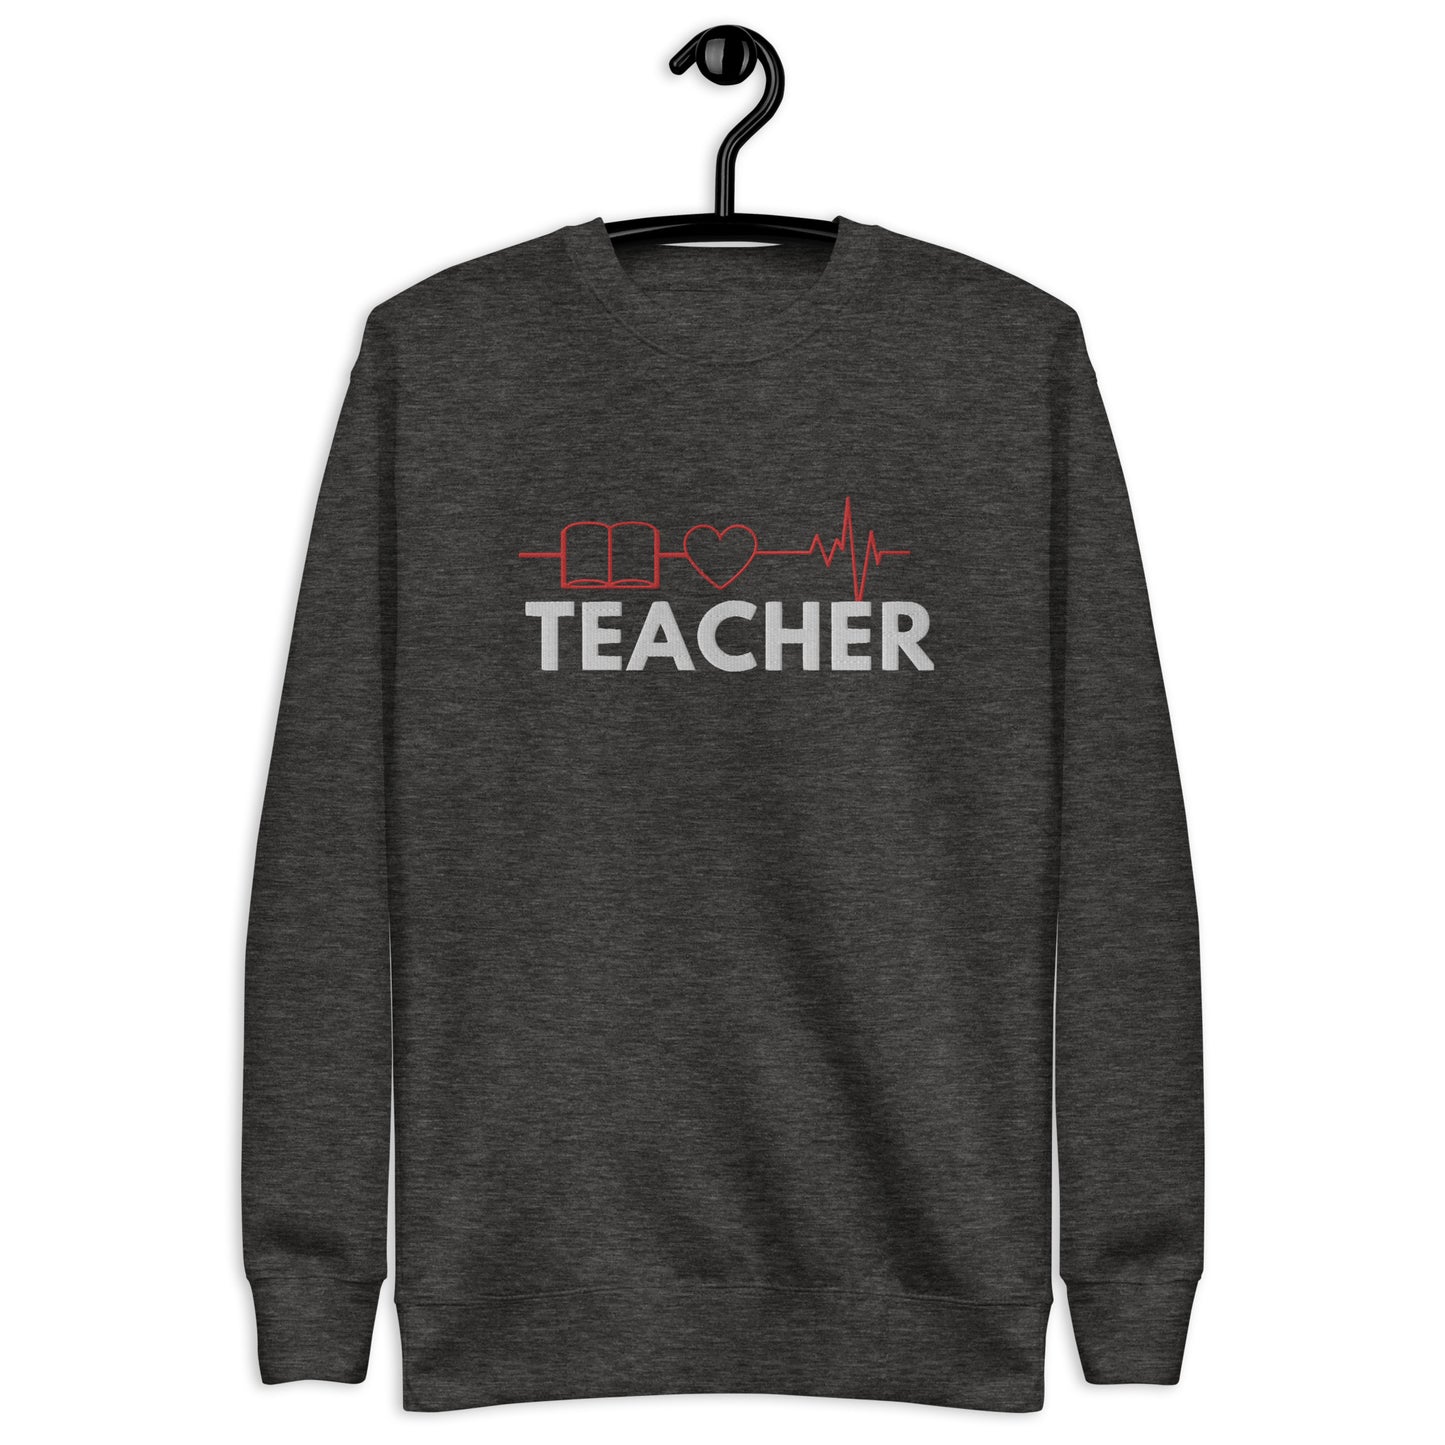 Teacher - Unisex Premium Sweatshirt